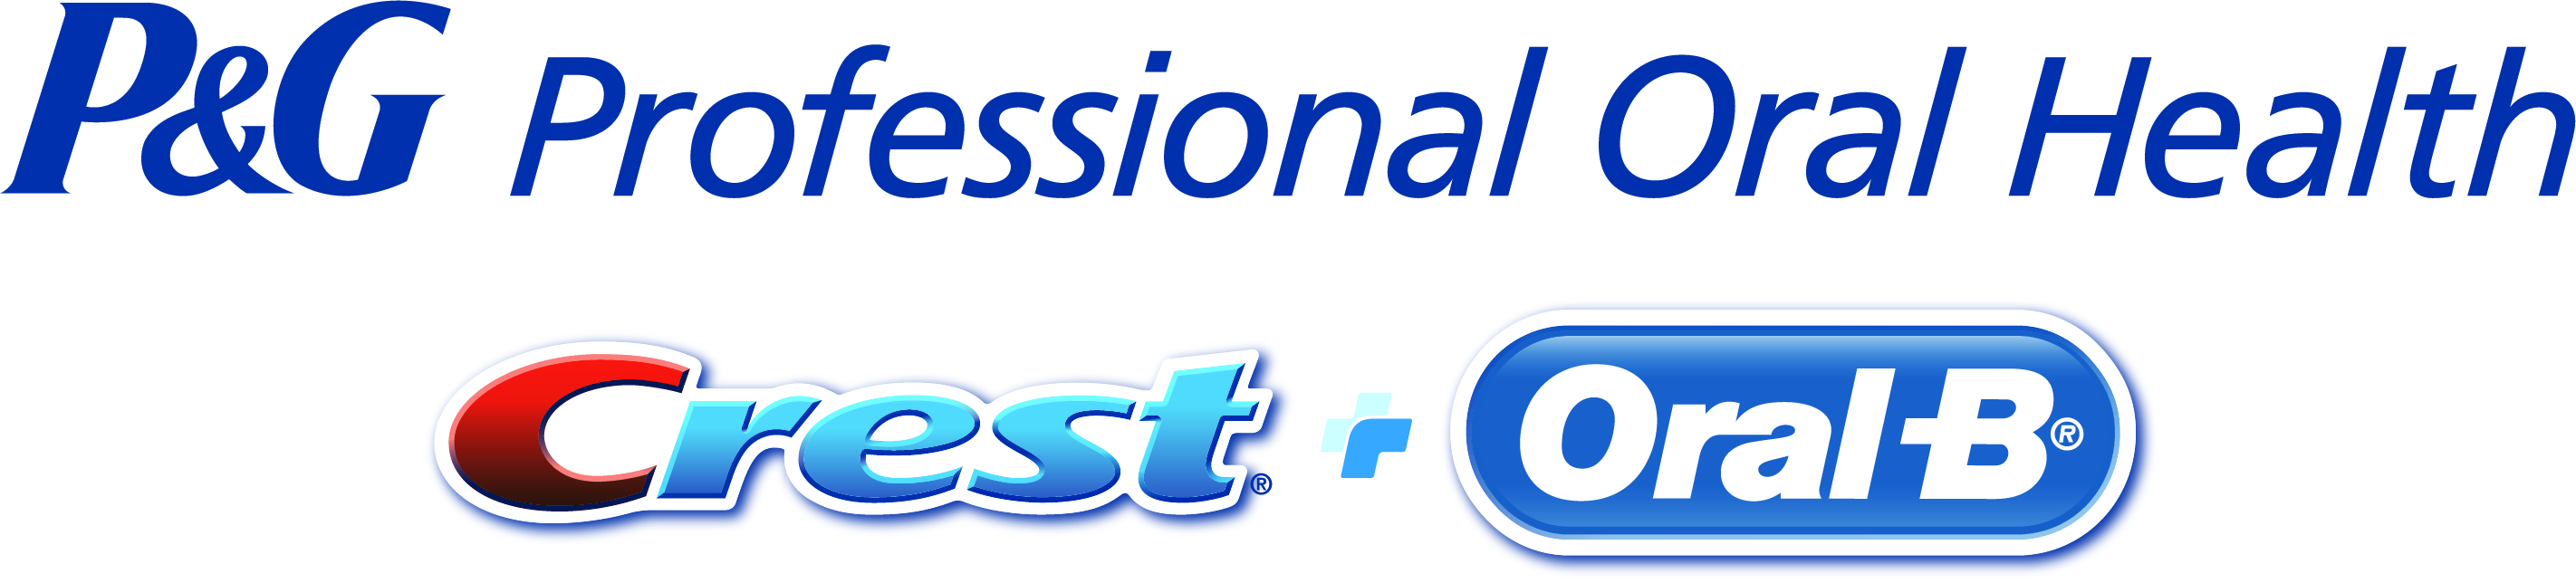 PG Professional Oral Health logo